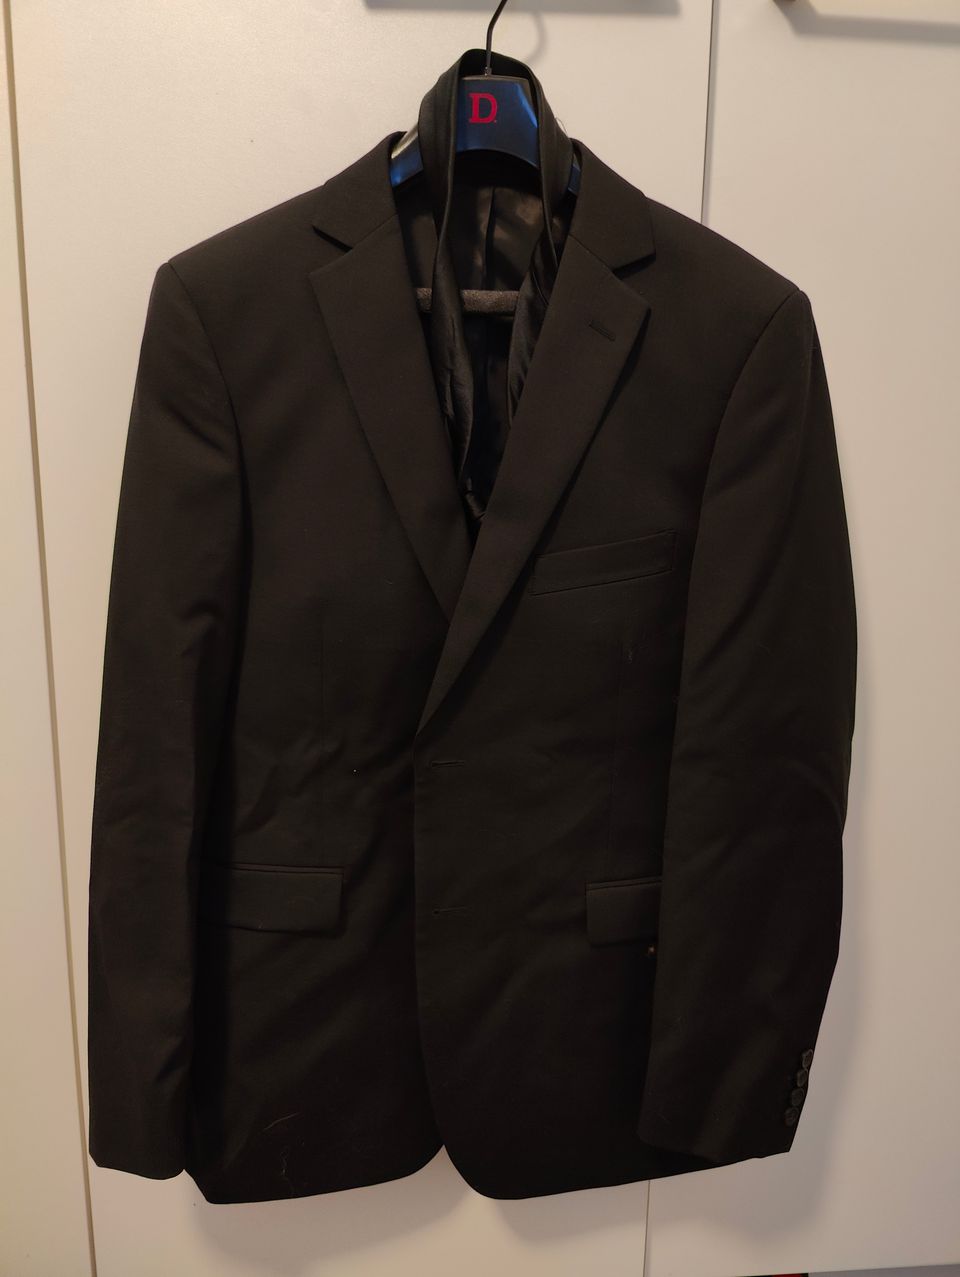 Musta puku, kauluspaita, kravaatti ja pukupussi